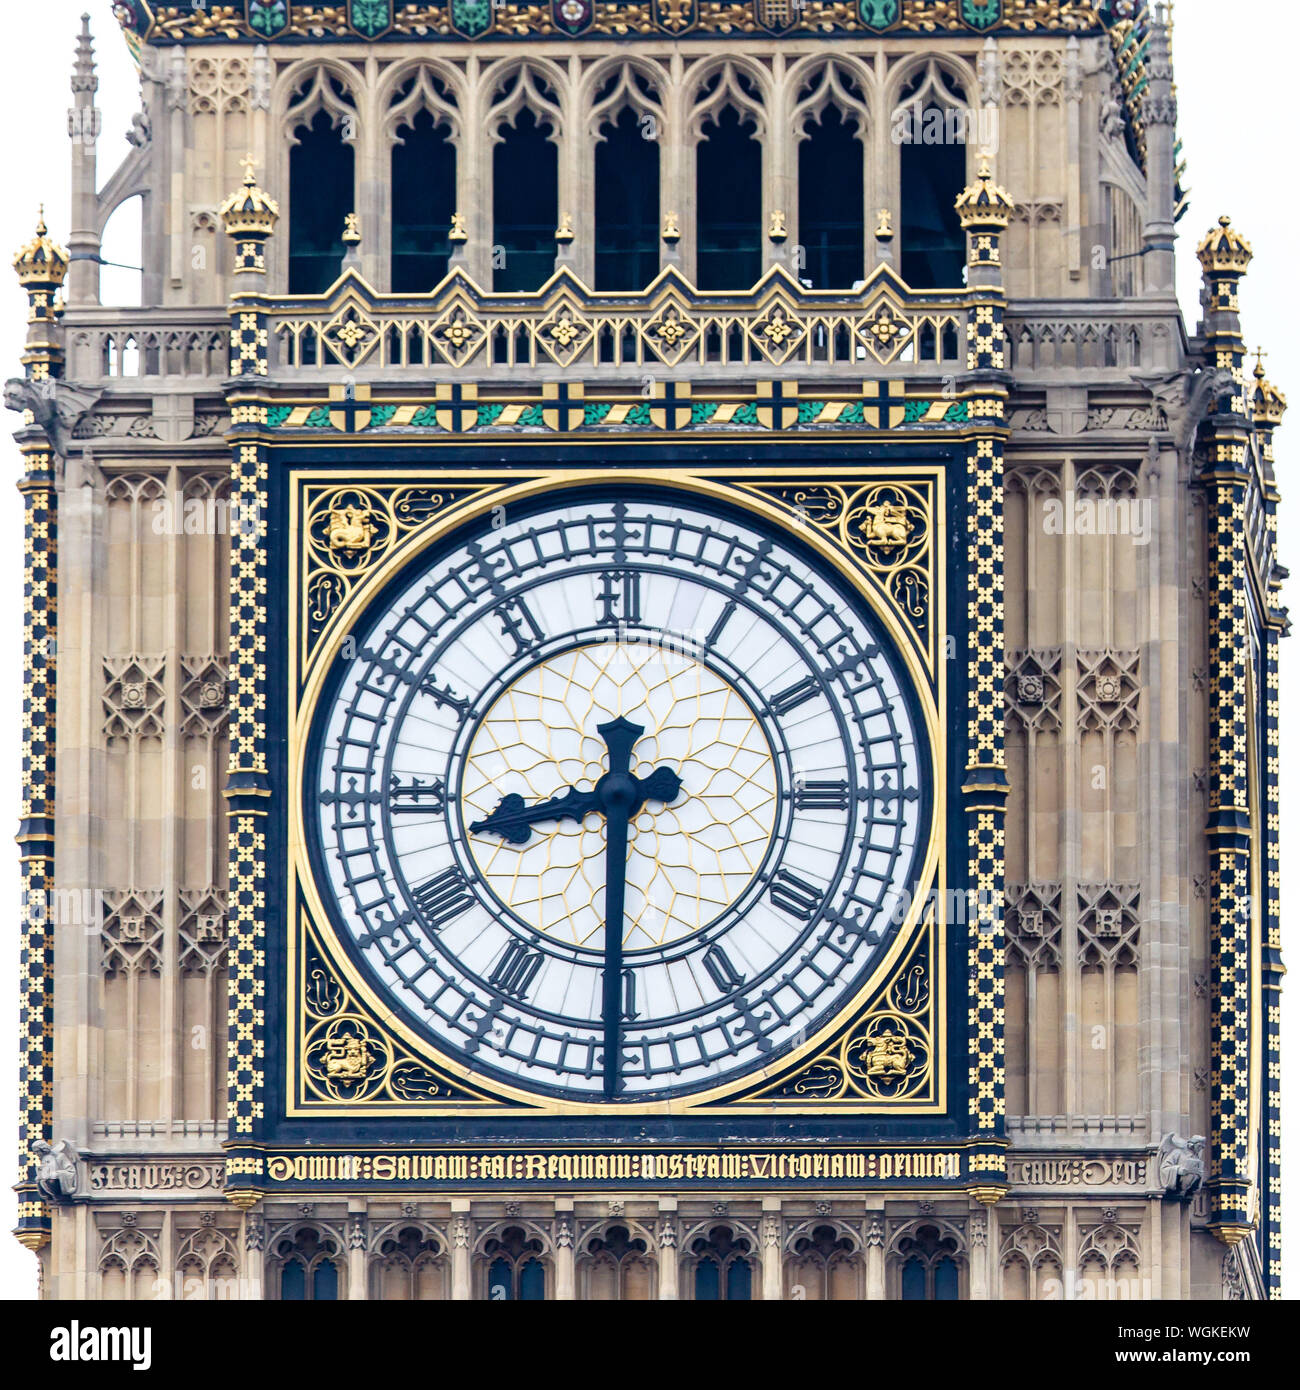 Inside Big Ben Clock Face